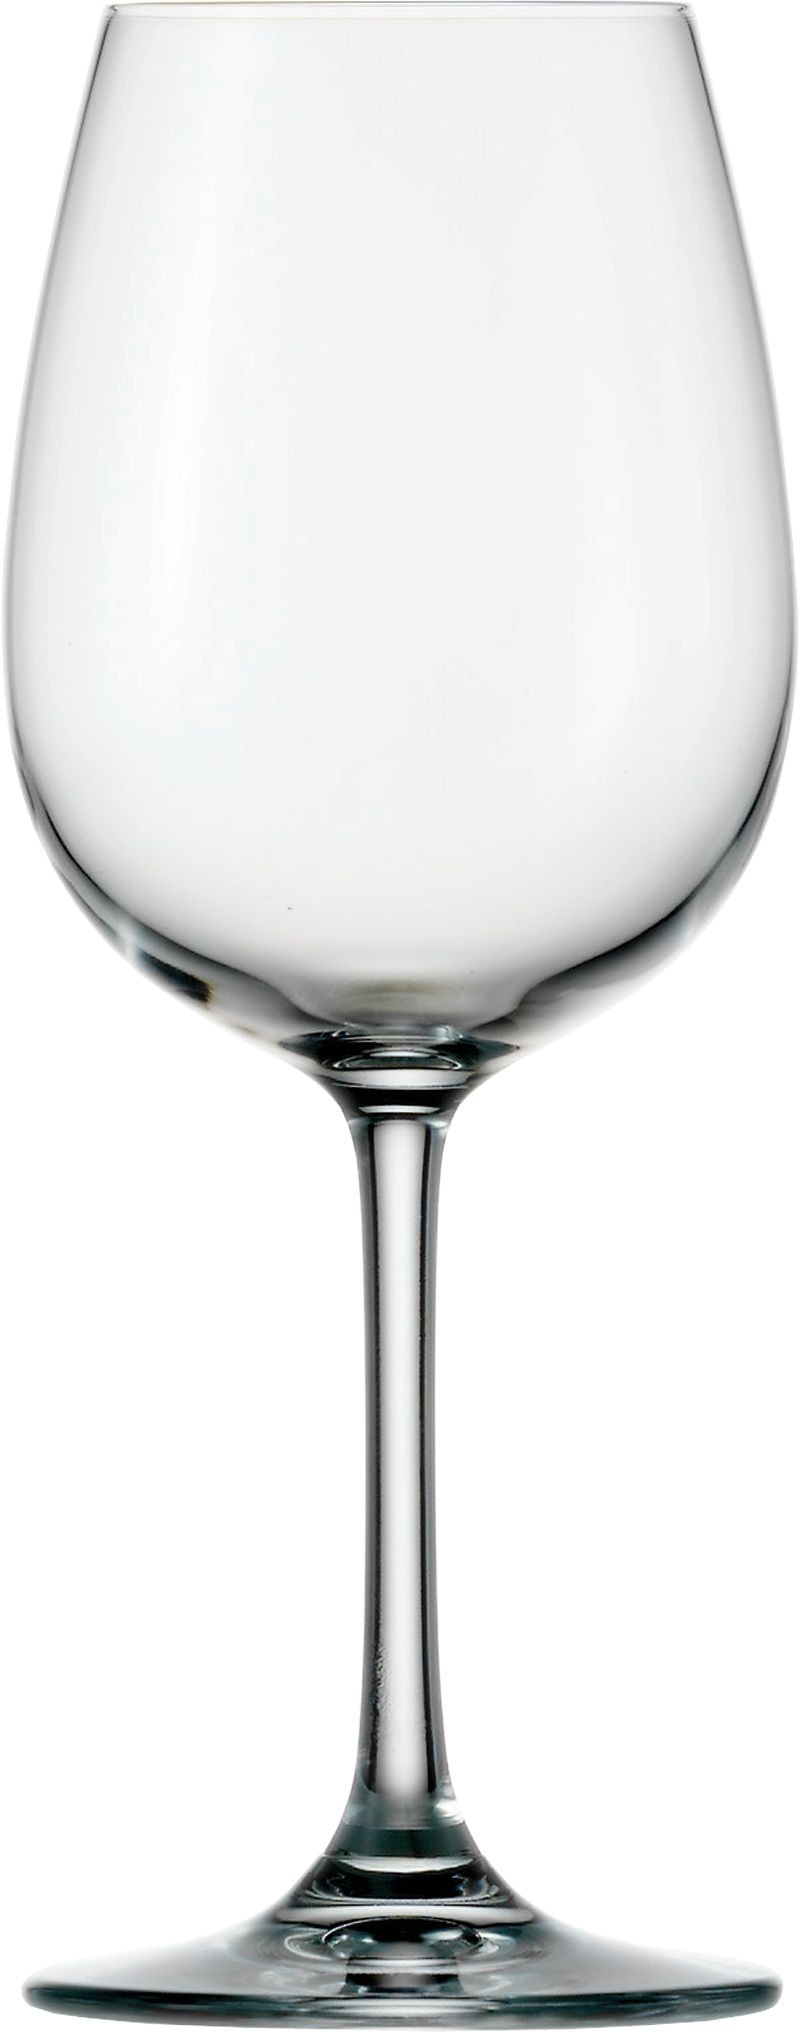 Stolzle Weinland White Wine Glass 12.25oz / 350ml 